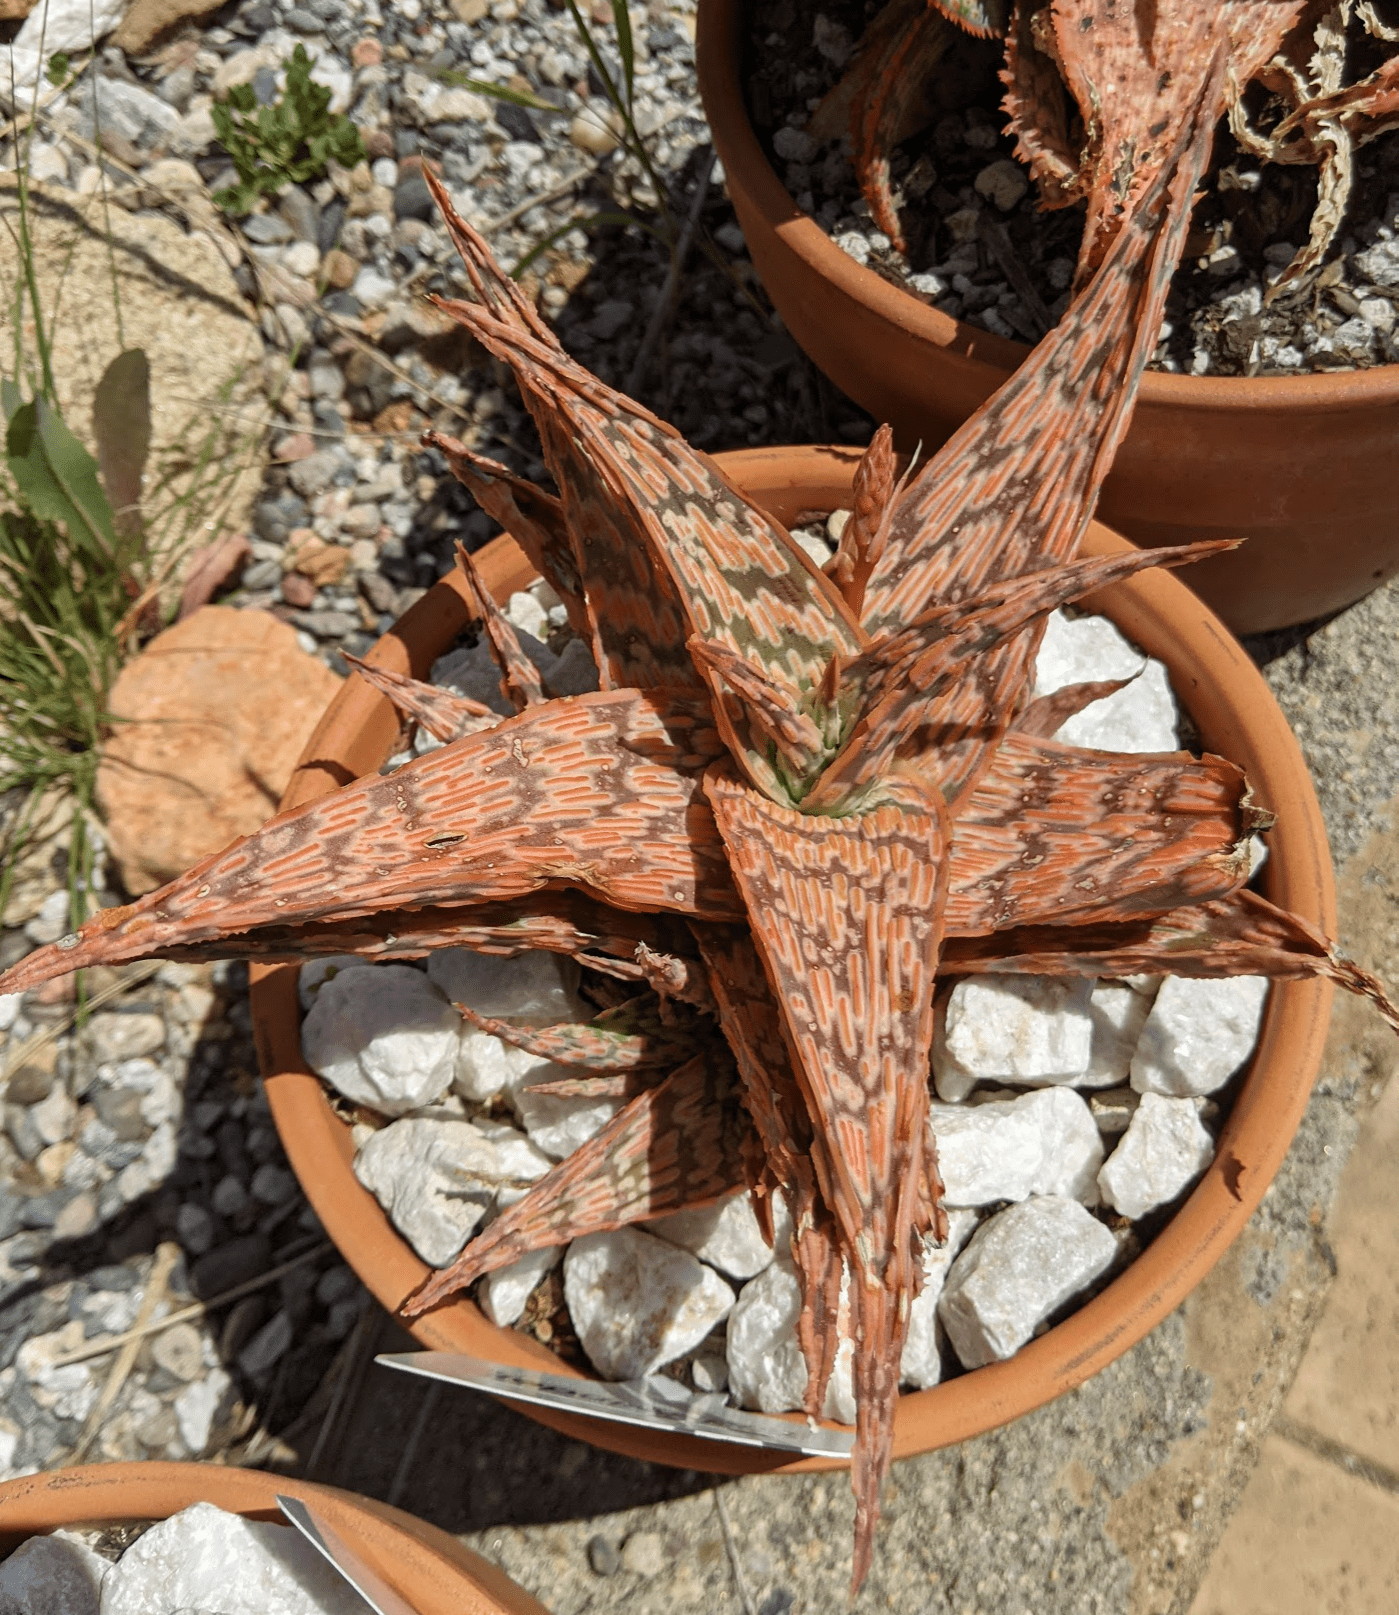 Aloe sidewinder